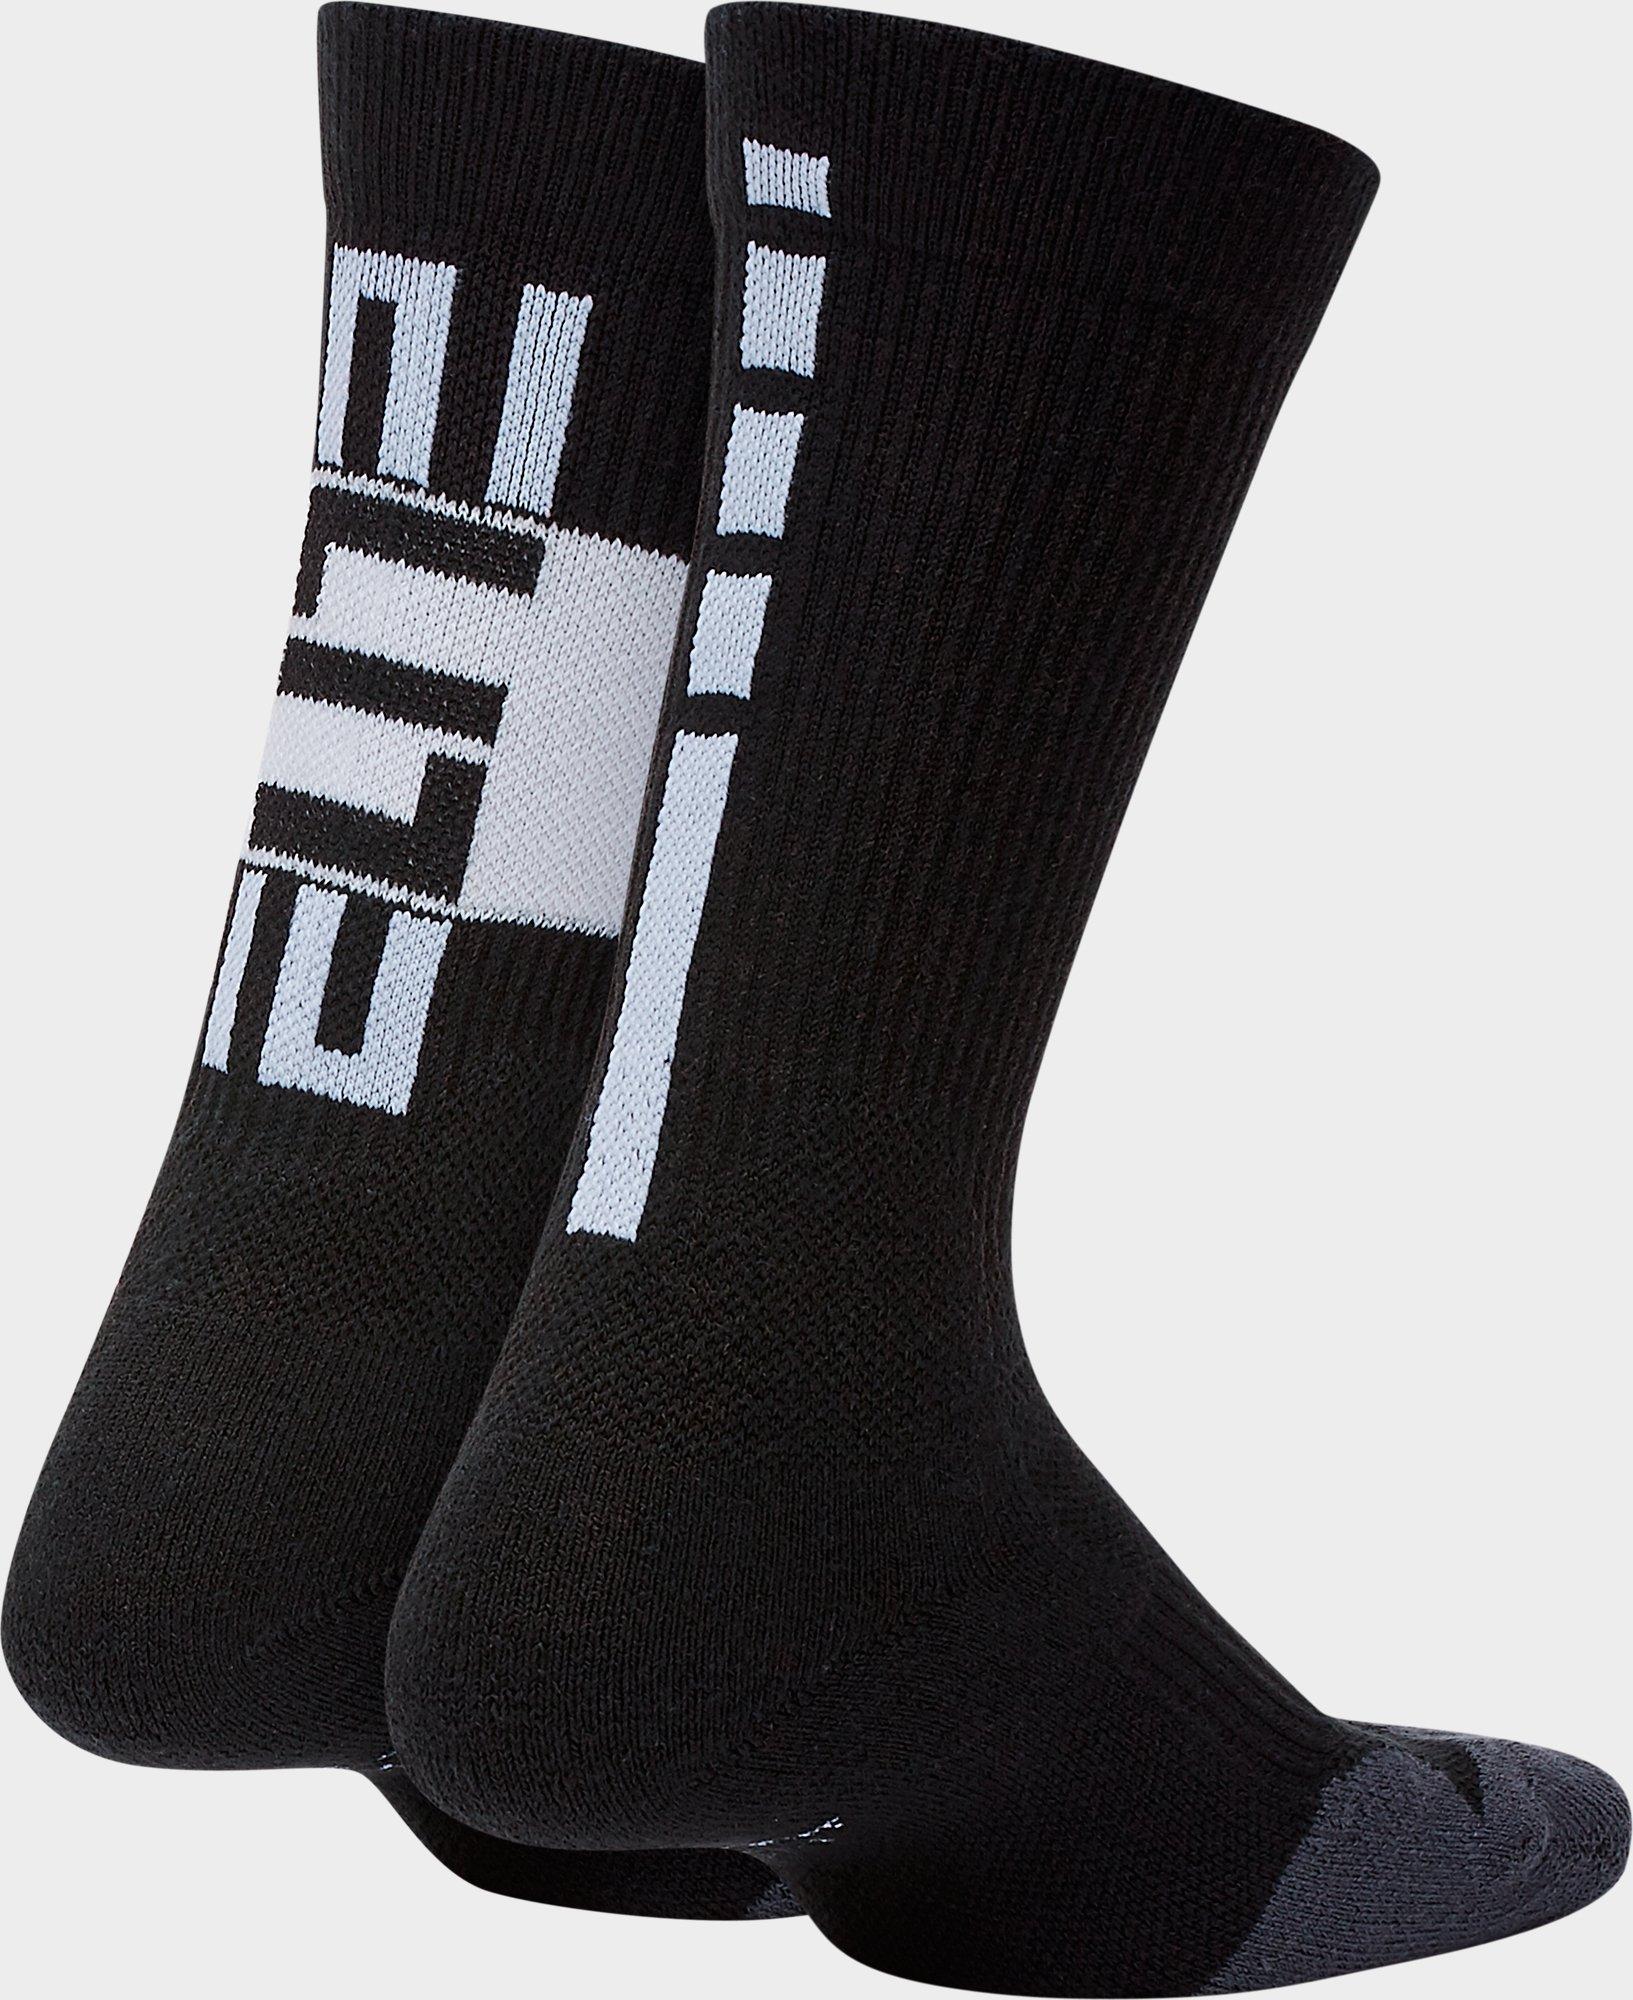 nike elite socks pack